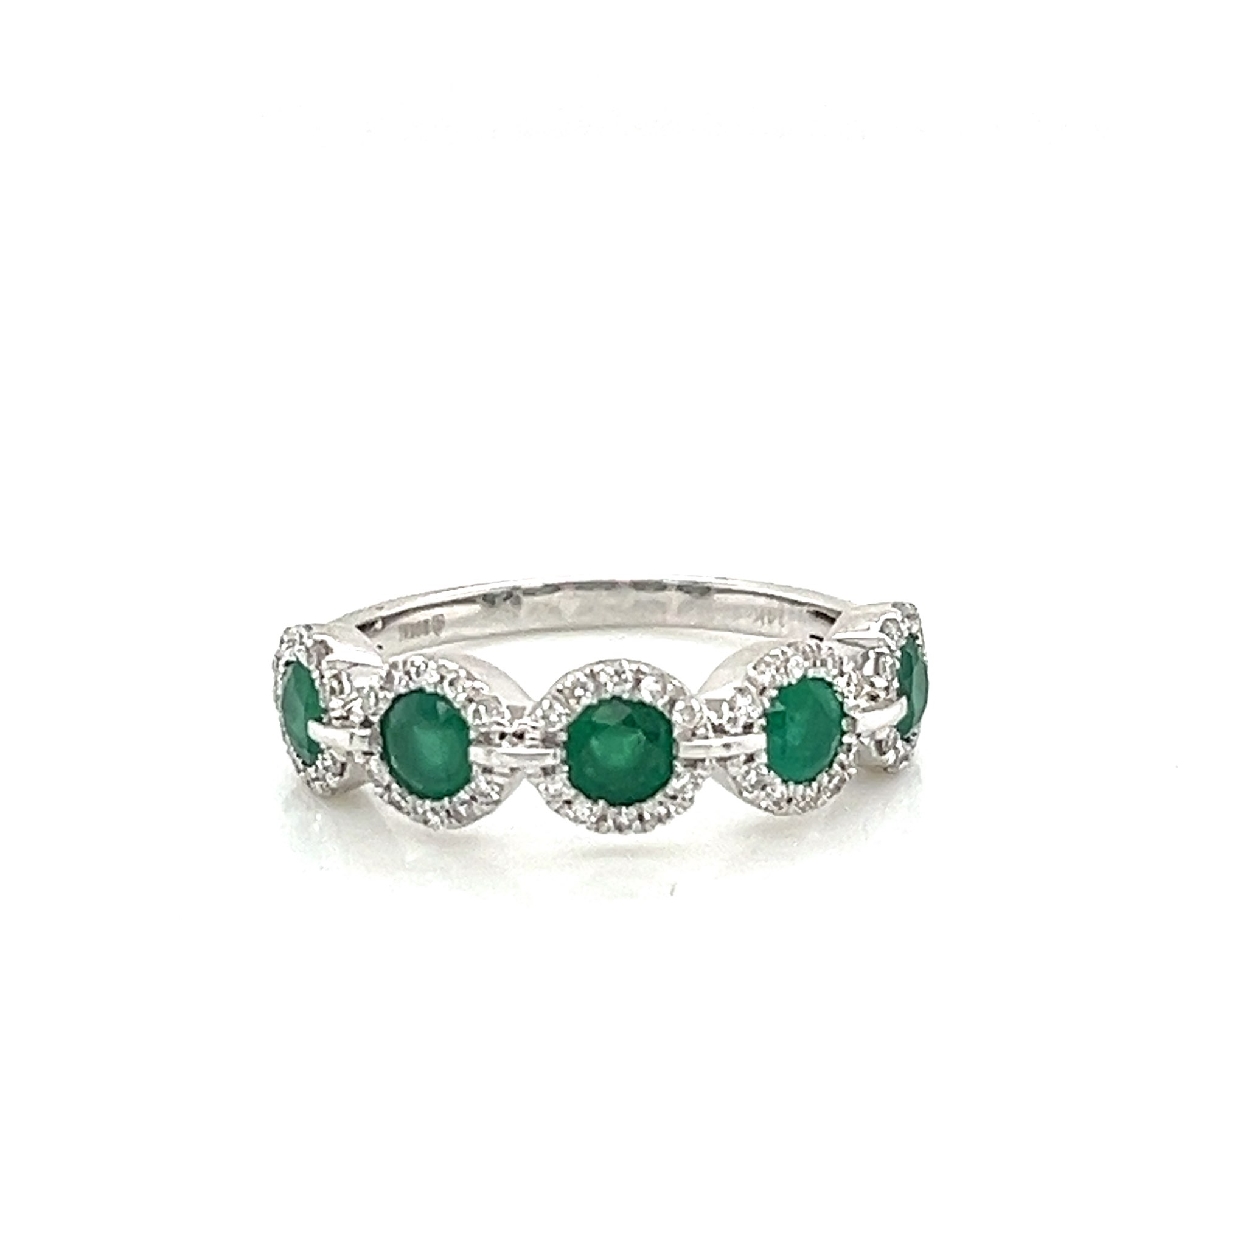 14K White Gold 1.15CT Emerald .27CT Diamond Ring 

Size 7 